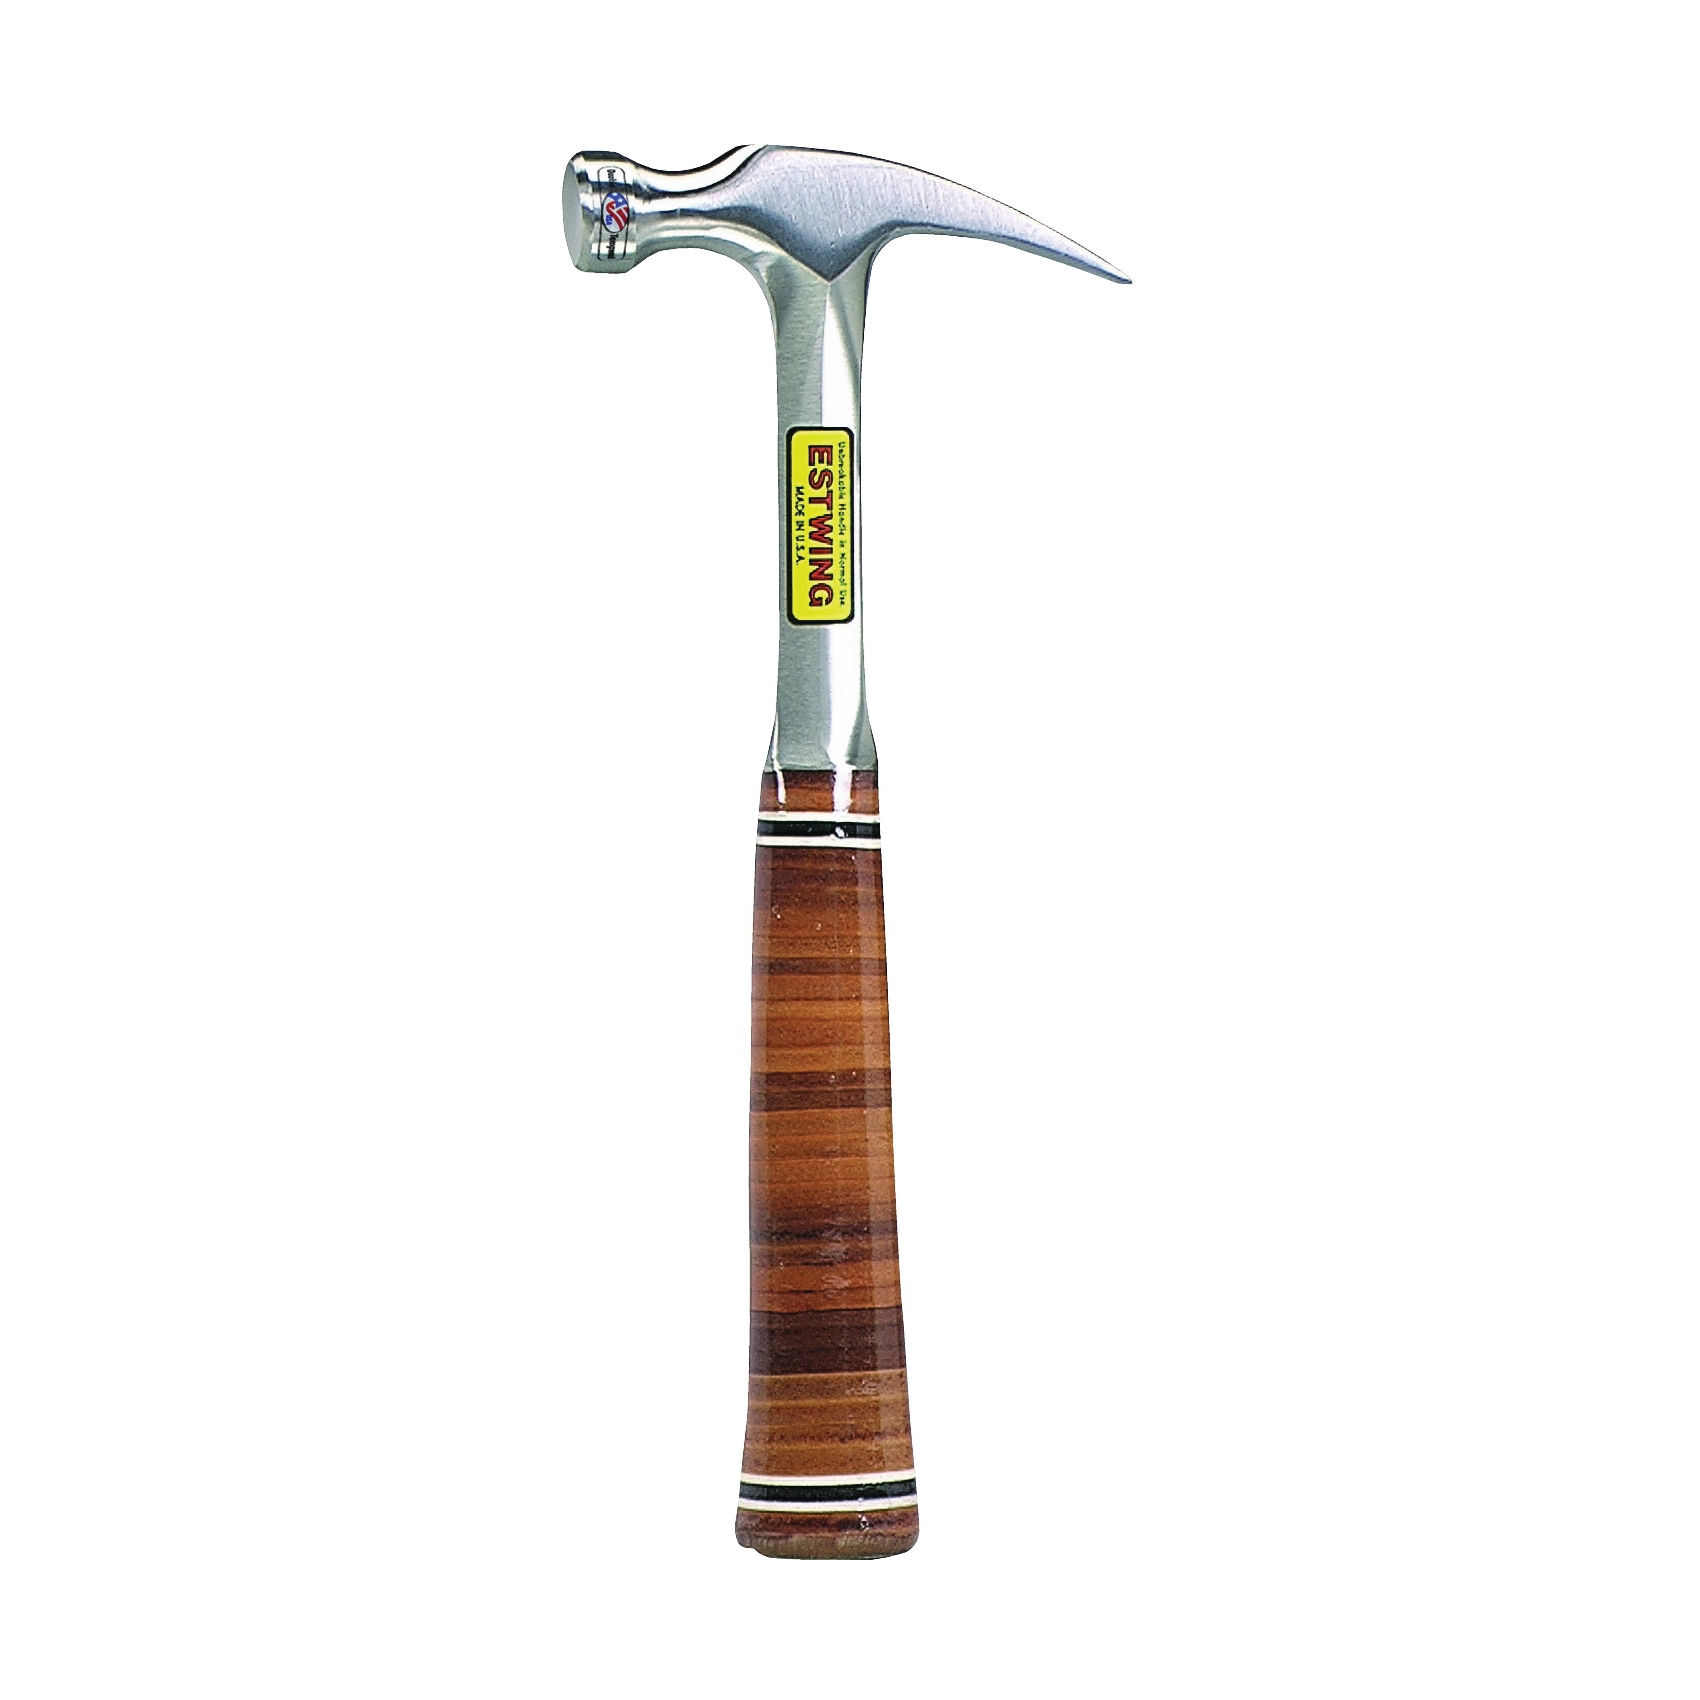 E20S Nail Hammer, 20 oz Head, Rip Claw, Smooth Head, Steel Head, 13-1/2 in OAL